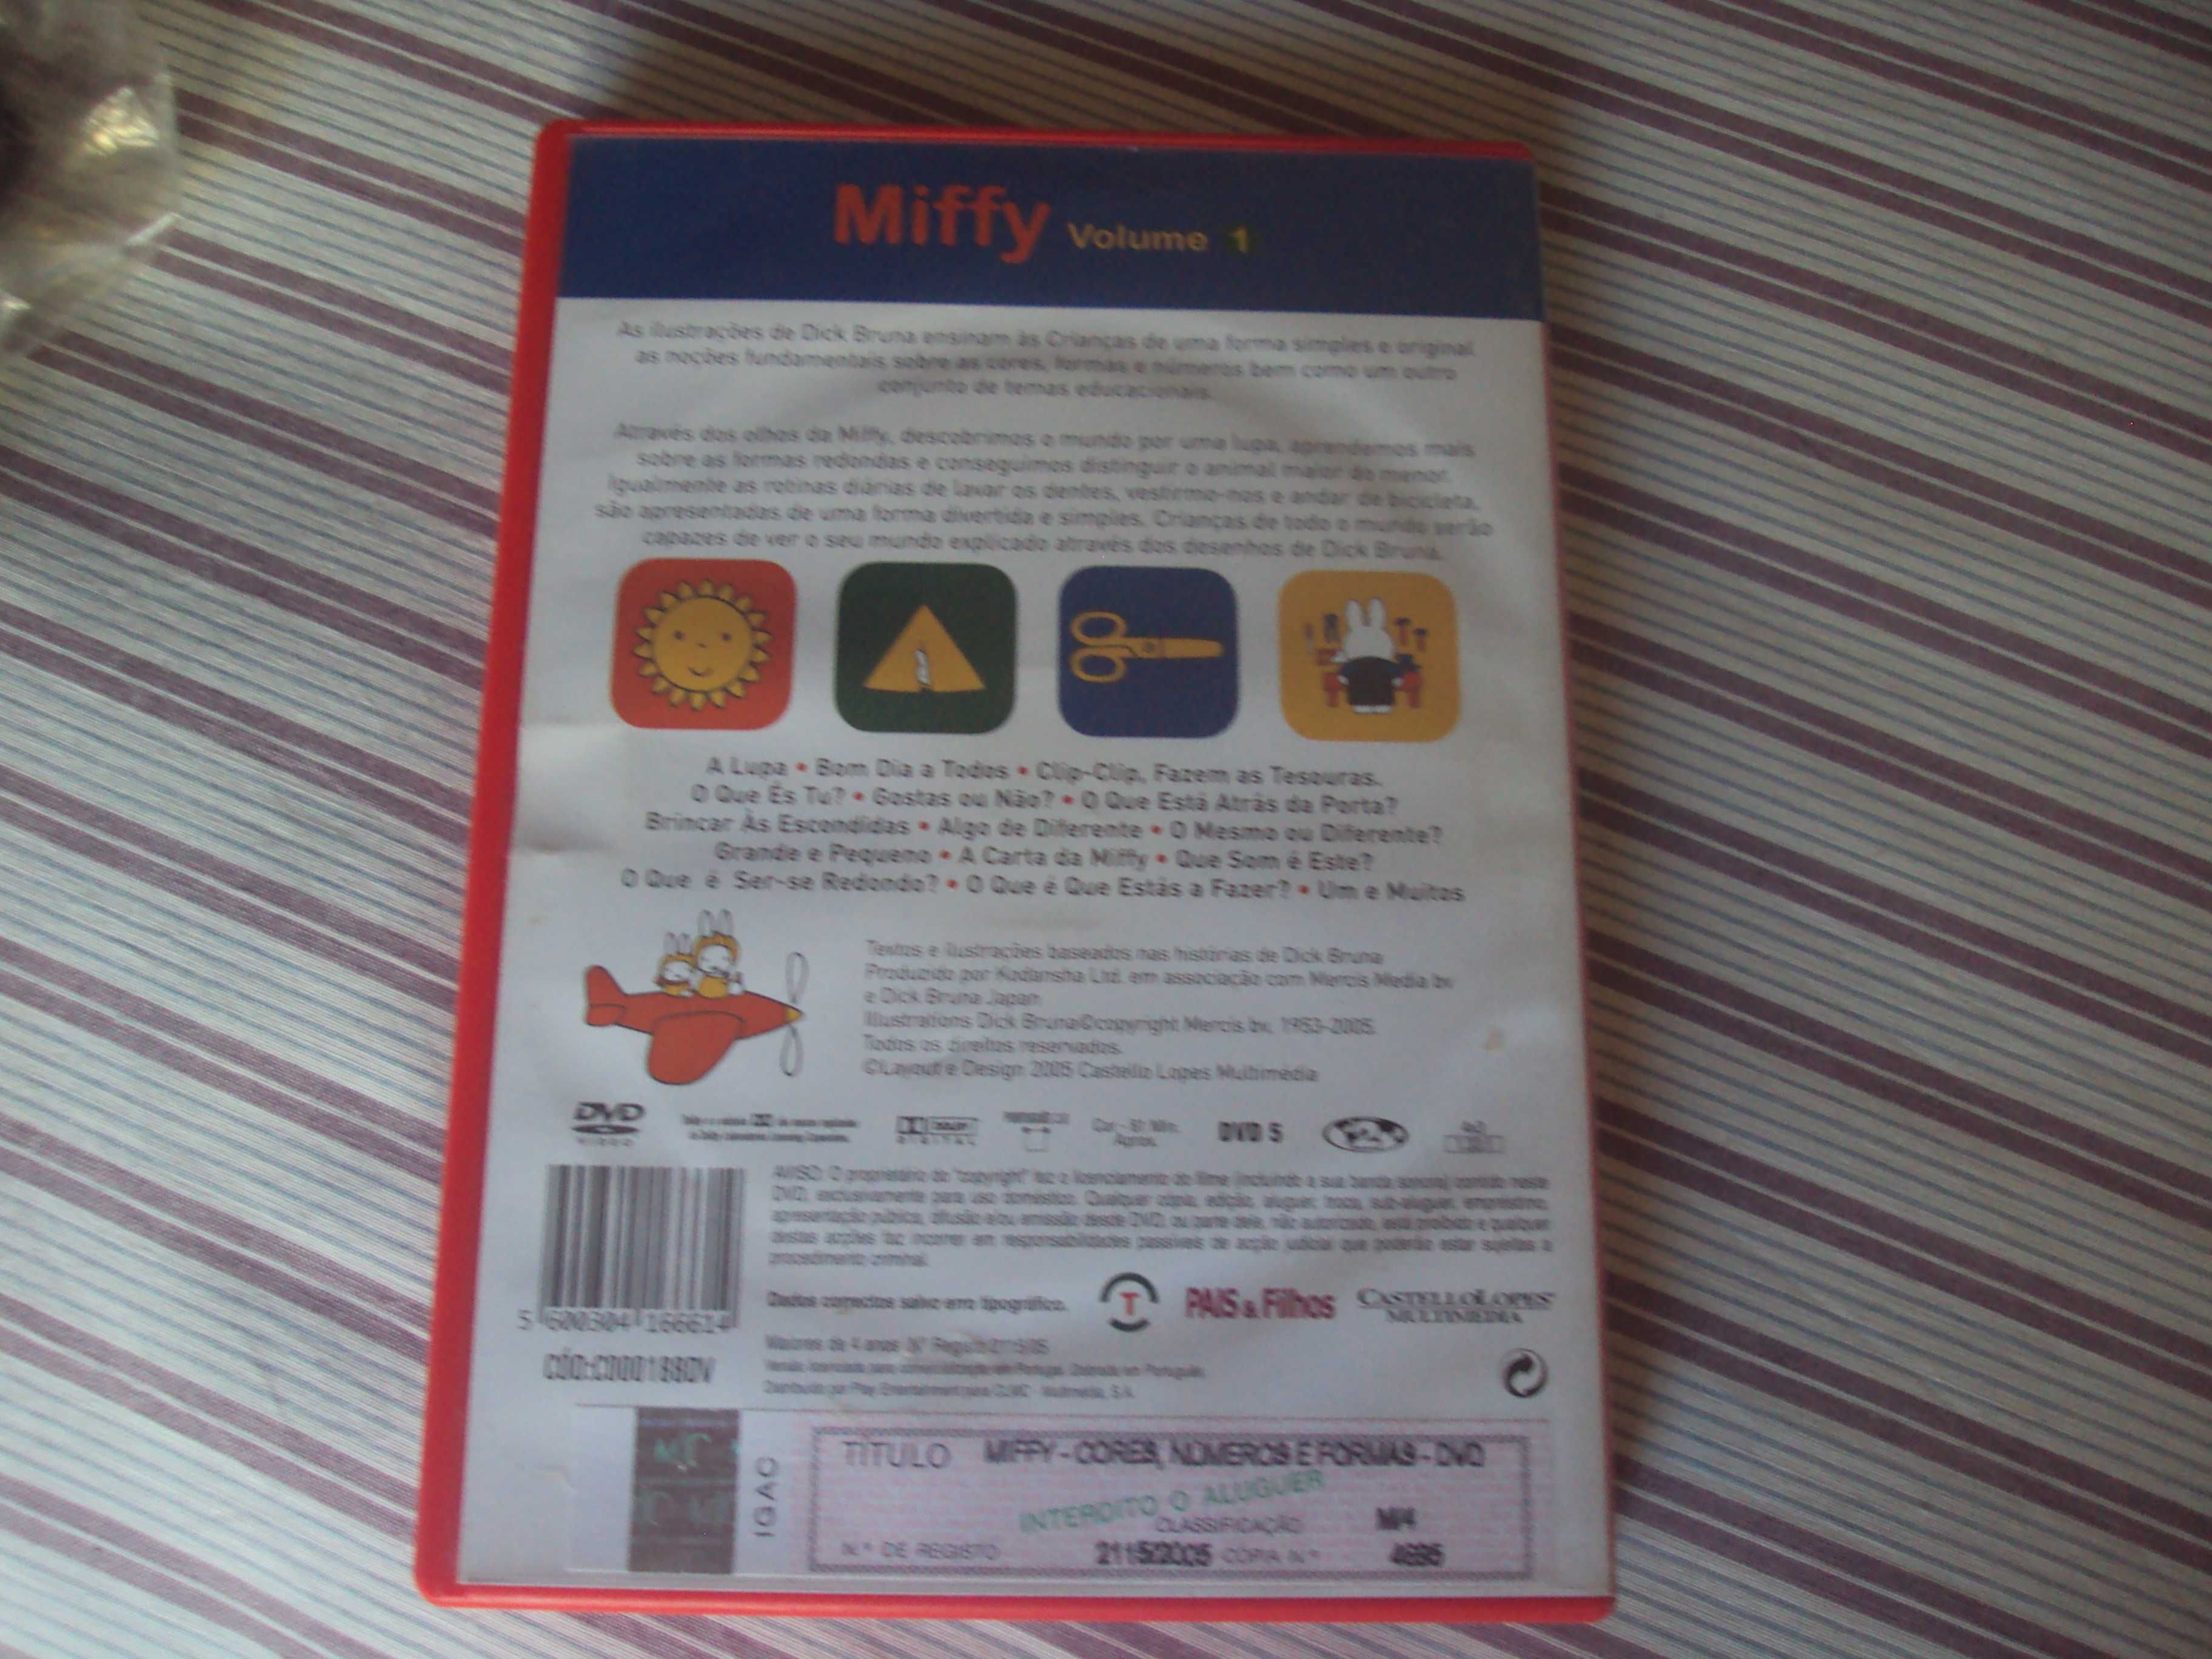 DVD “Miffy volume 1”